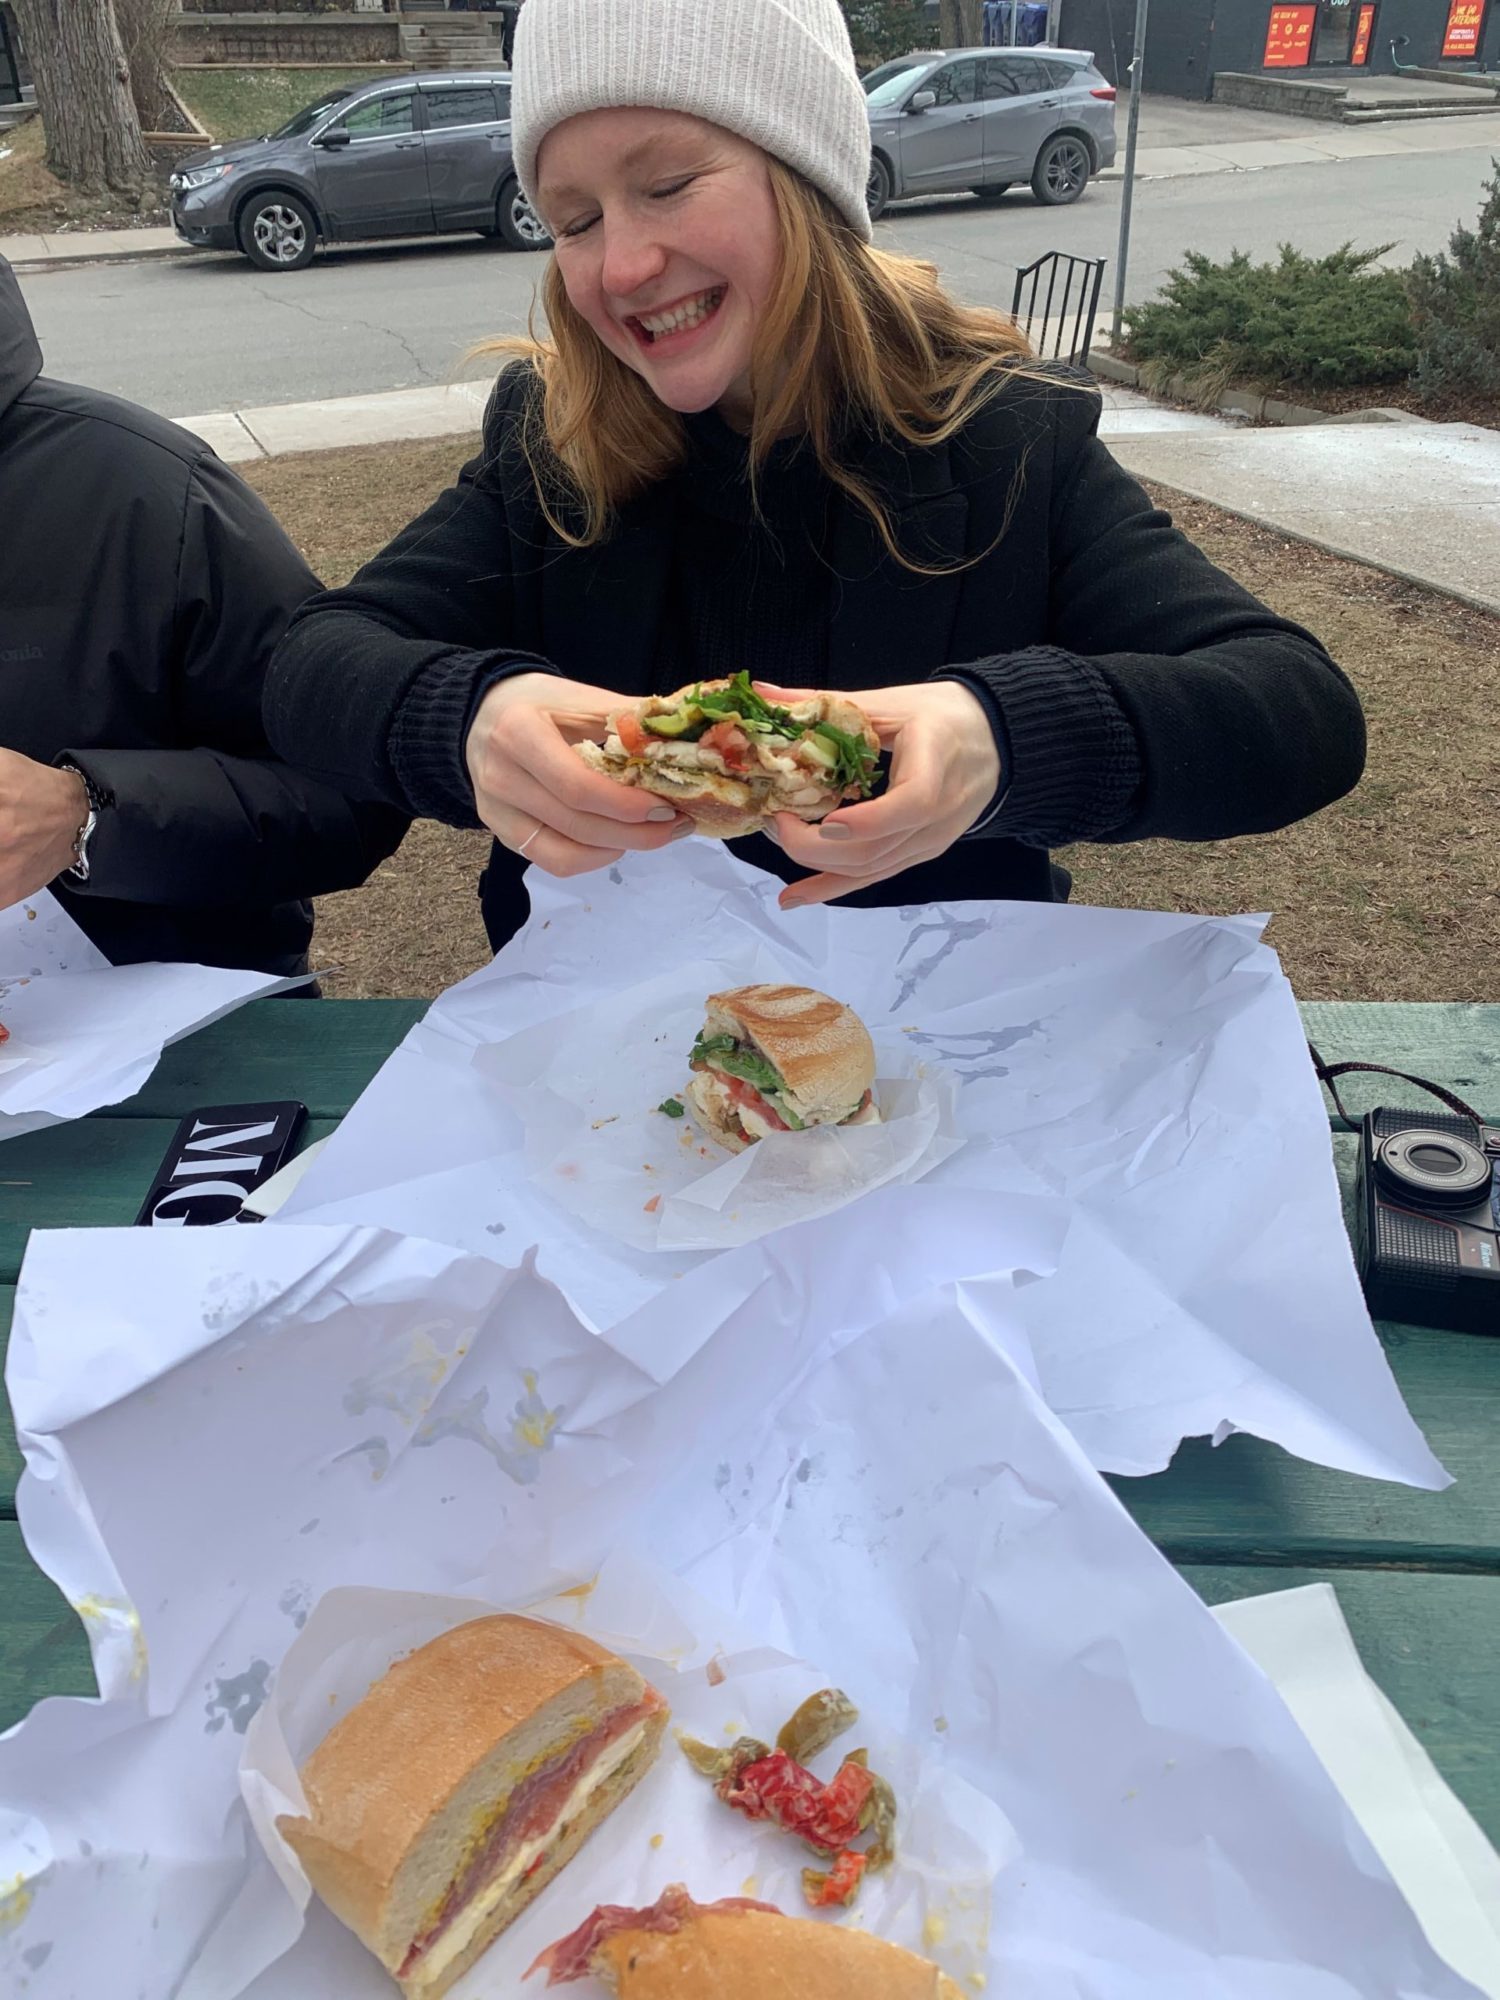 Madeleine eating a sandwich